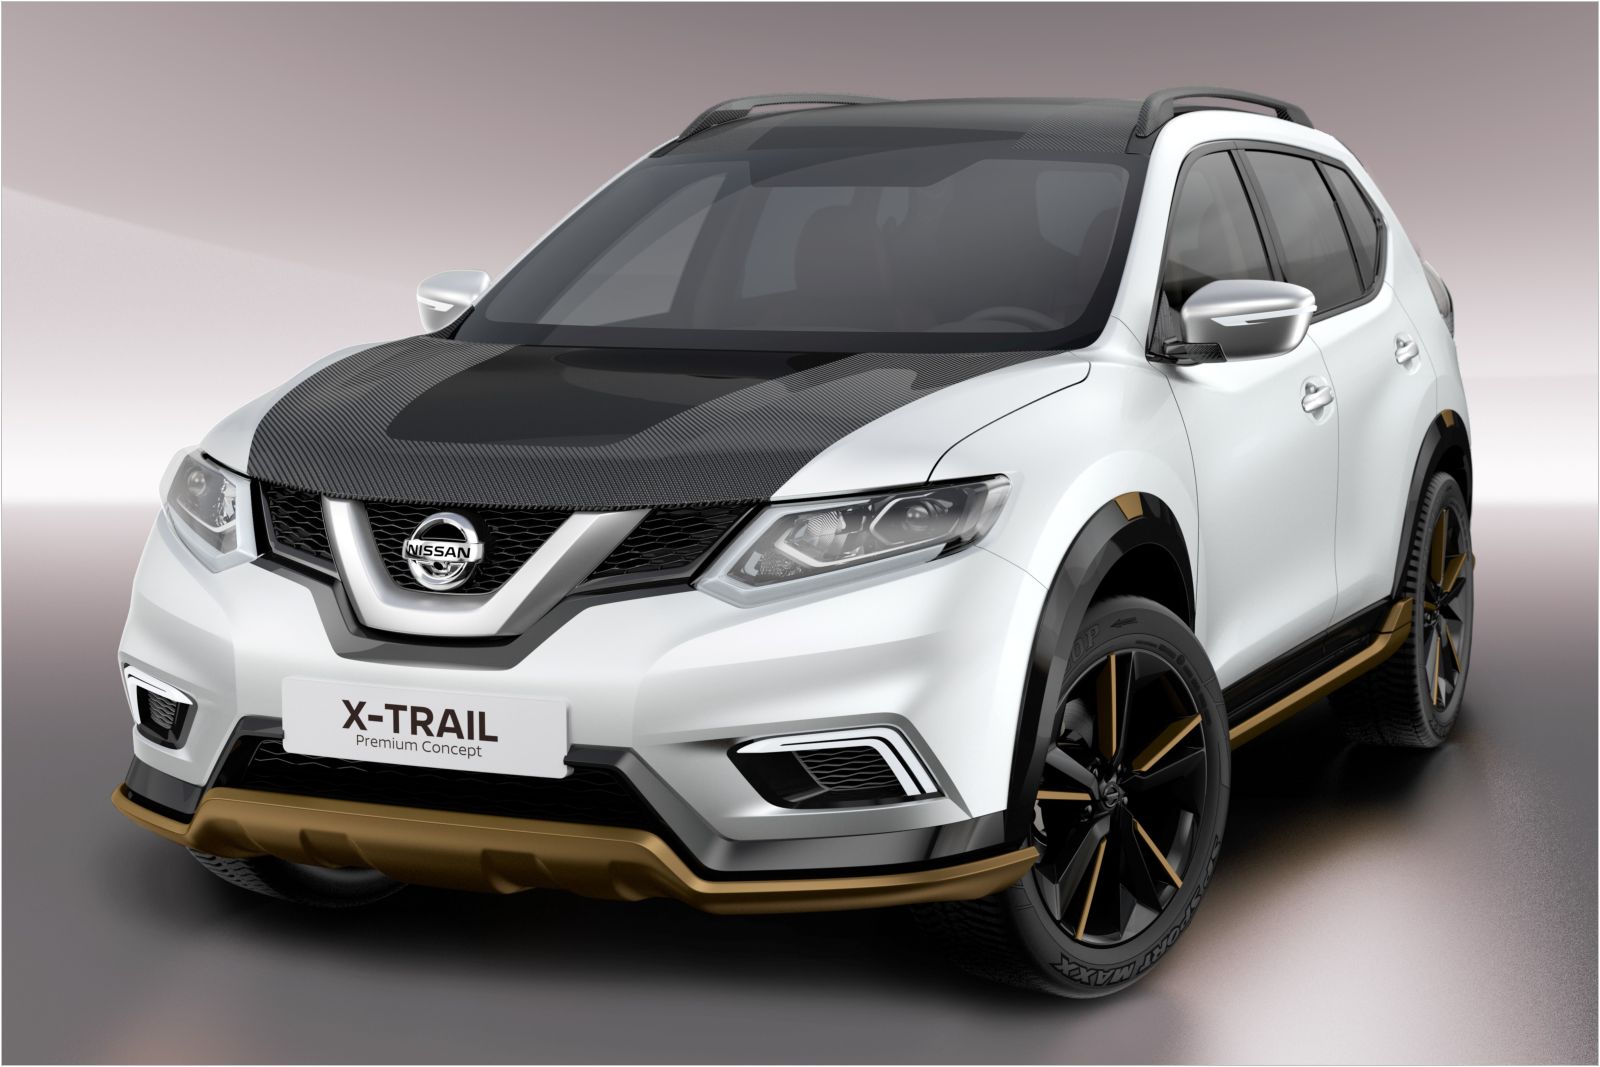 Nissan X-Trail Premium Concept, 1600x1067px, img-1